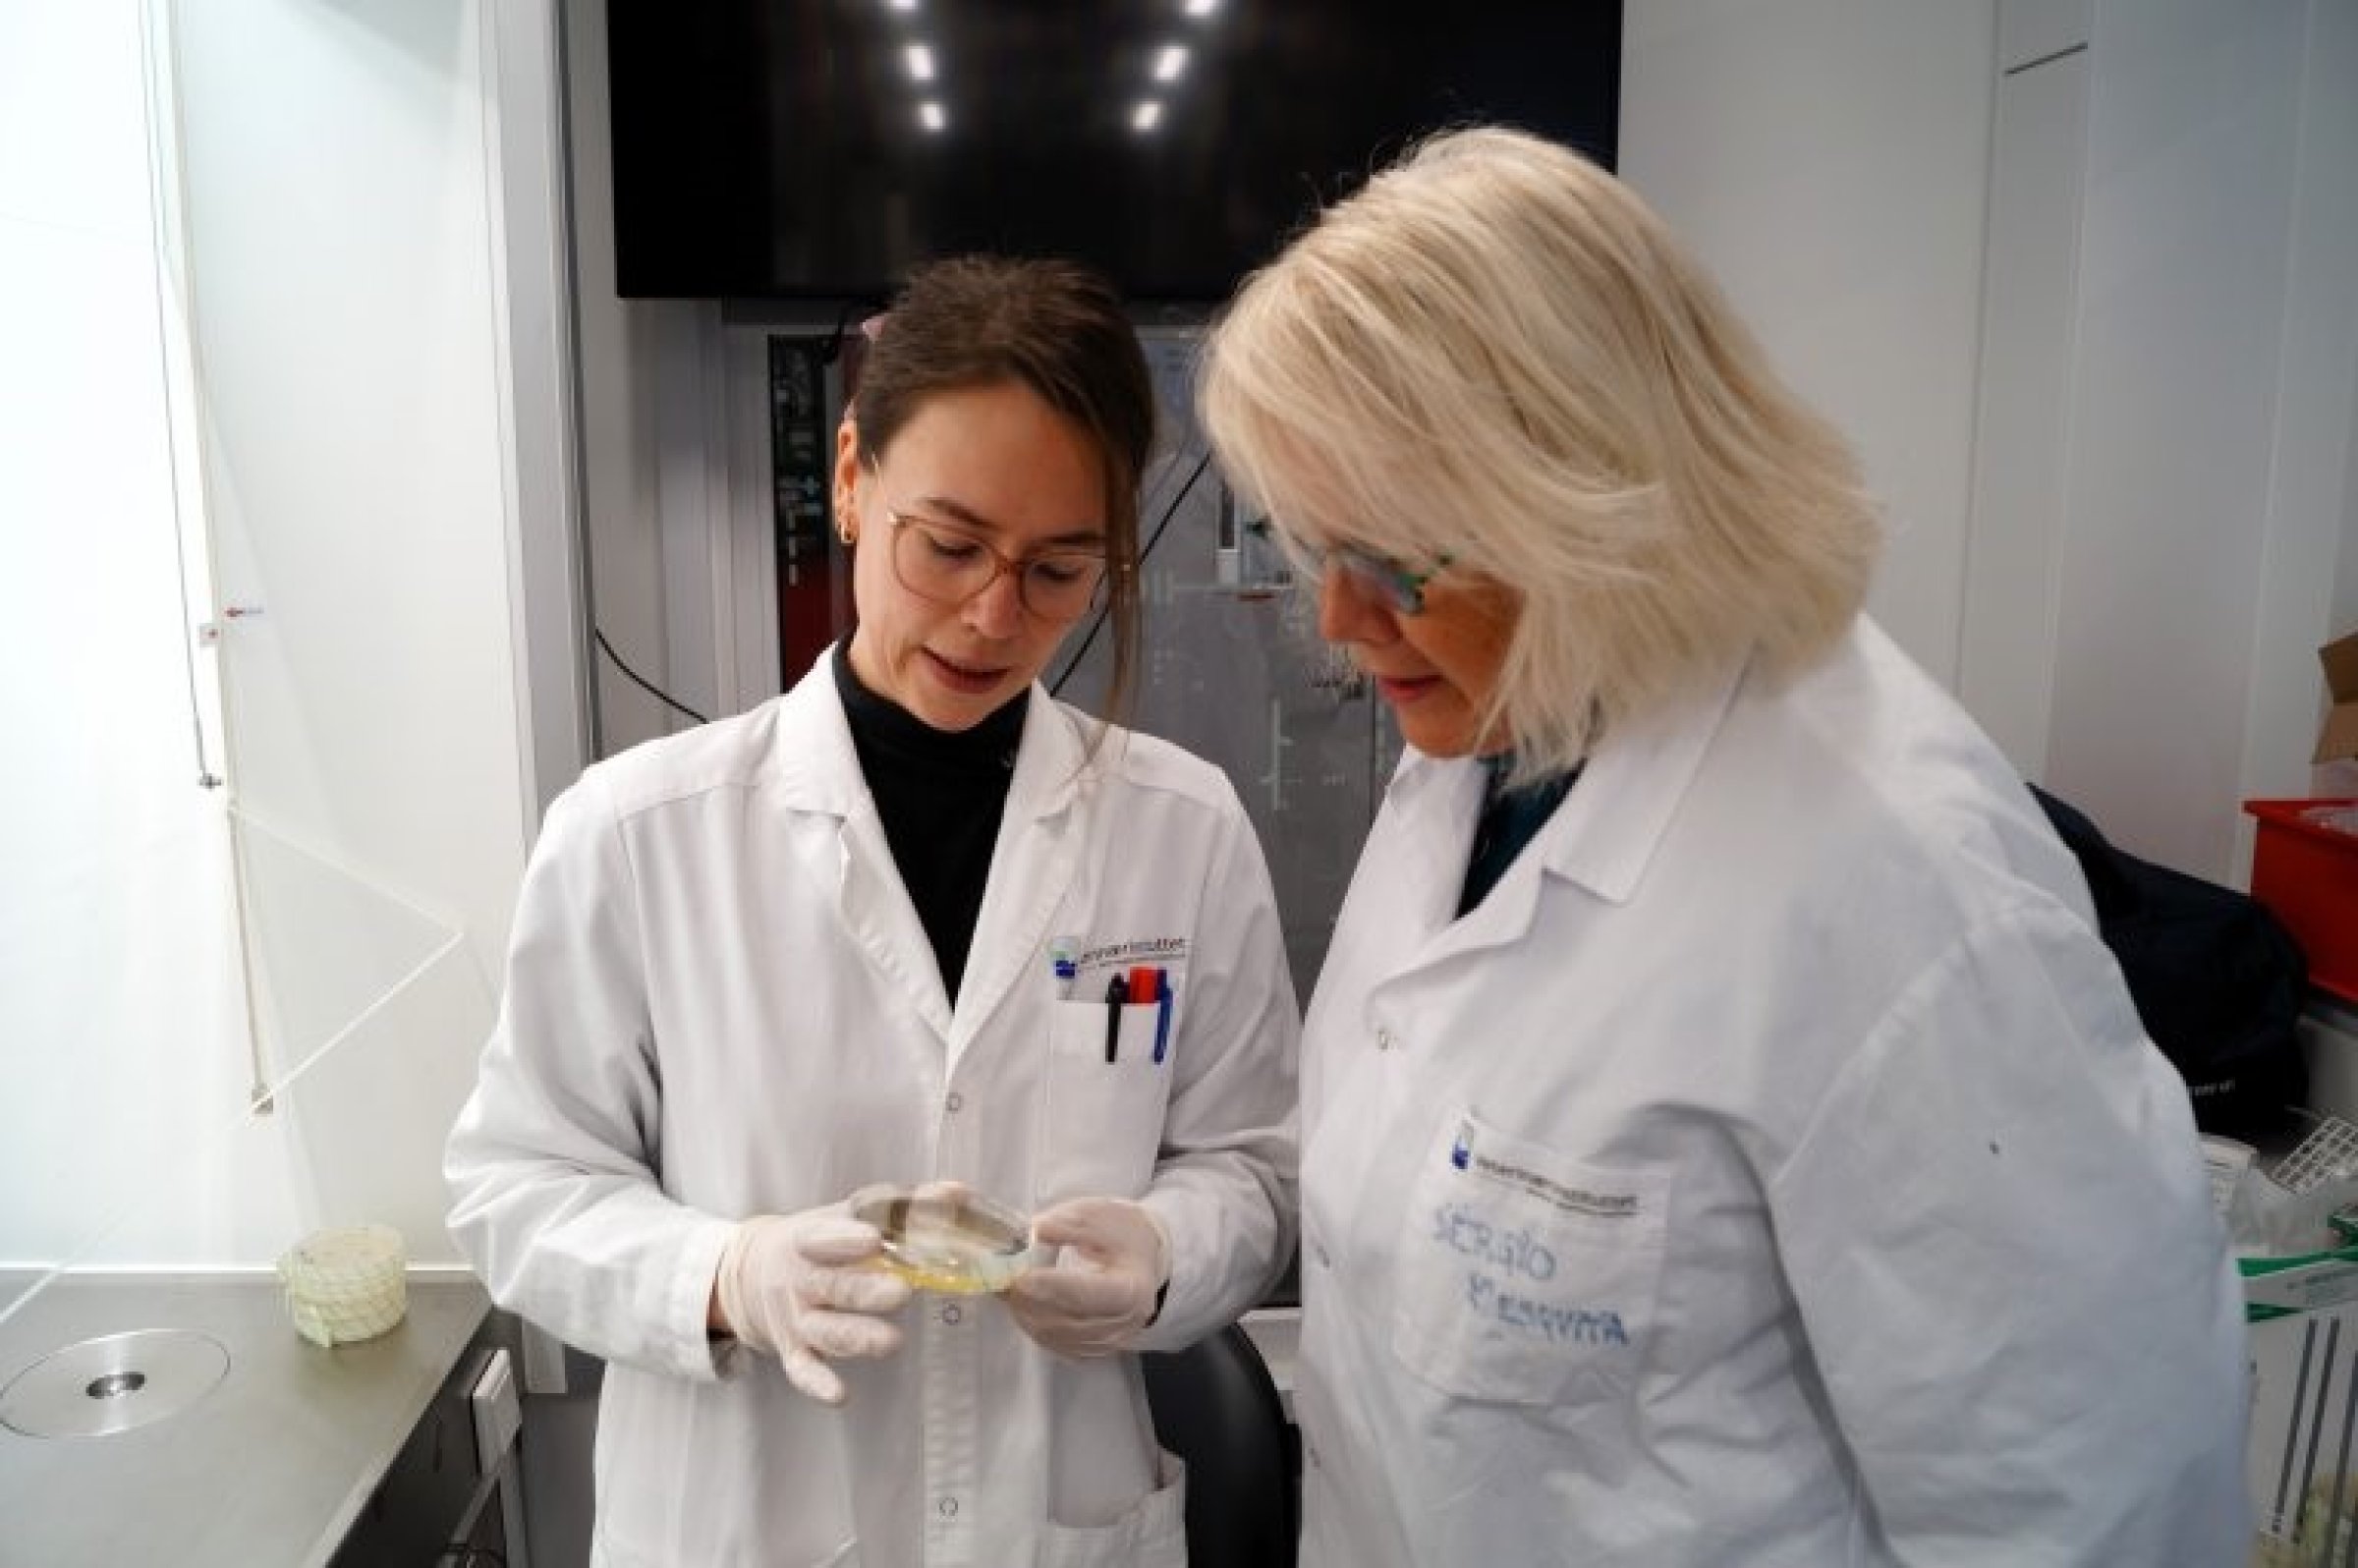 Forskar Ida Skaar og masterstudenten hennar, Marte Mølmann Kåråsen, står i eit laboratorium i hvite frakkar og ser sammen på ein petriskål.